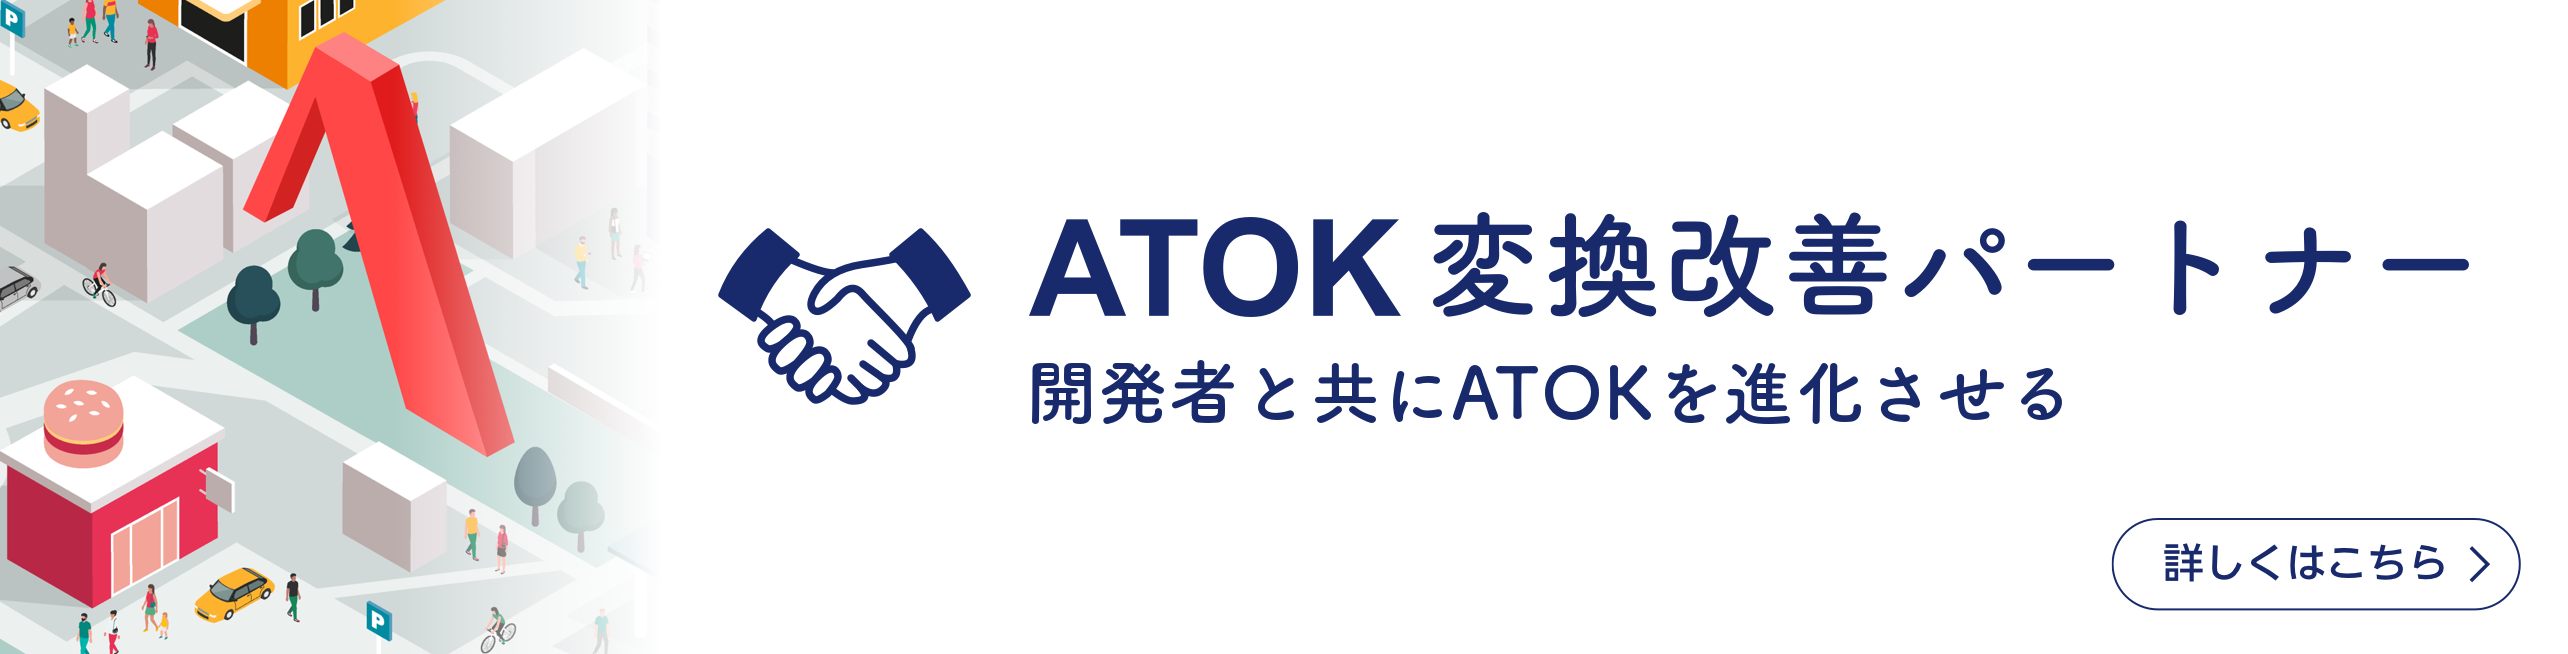 「ATOK for Mac」に新機能を提供